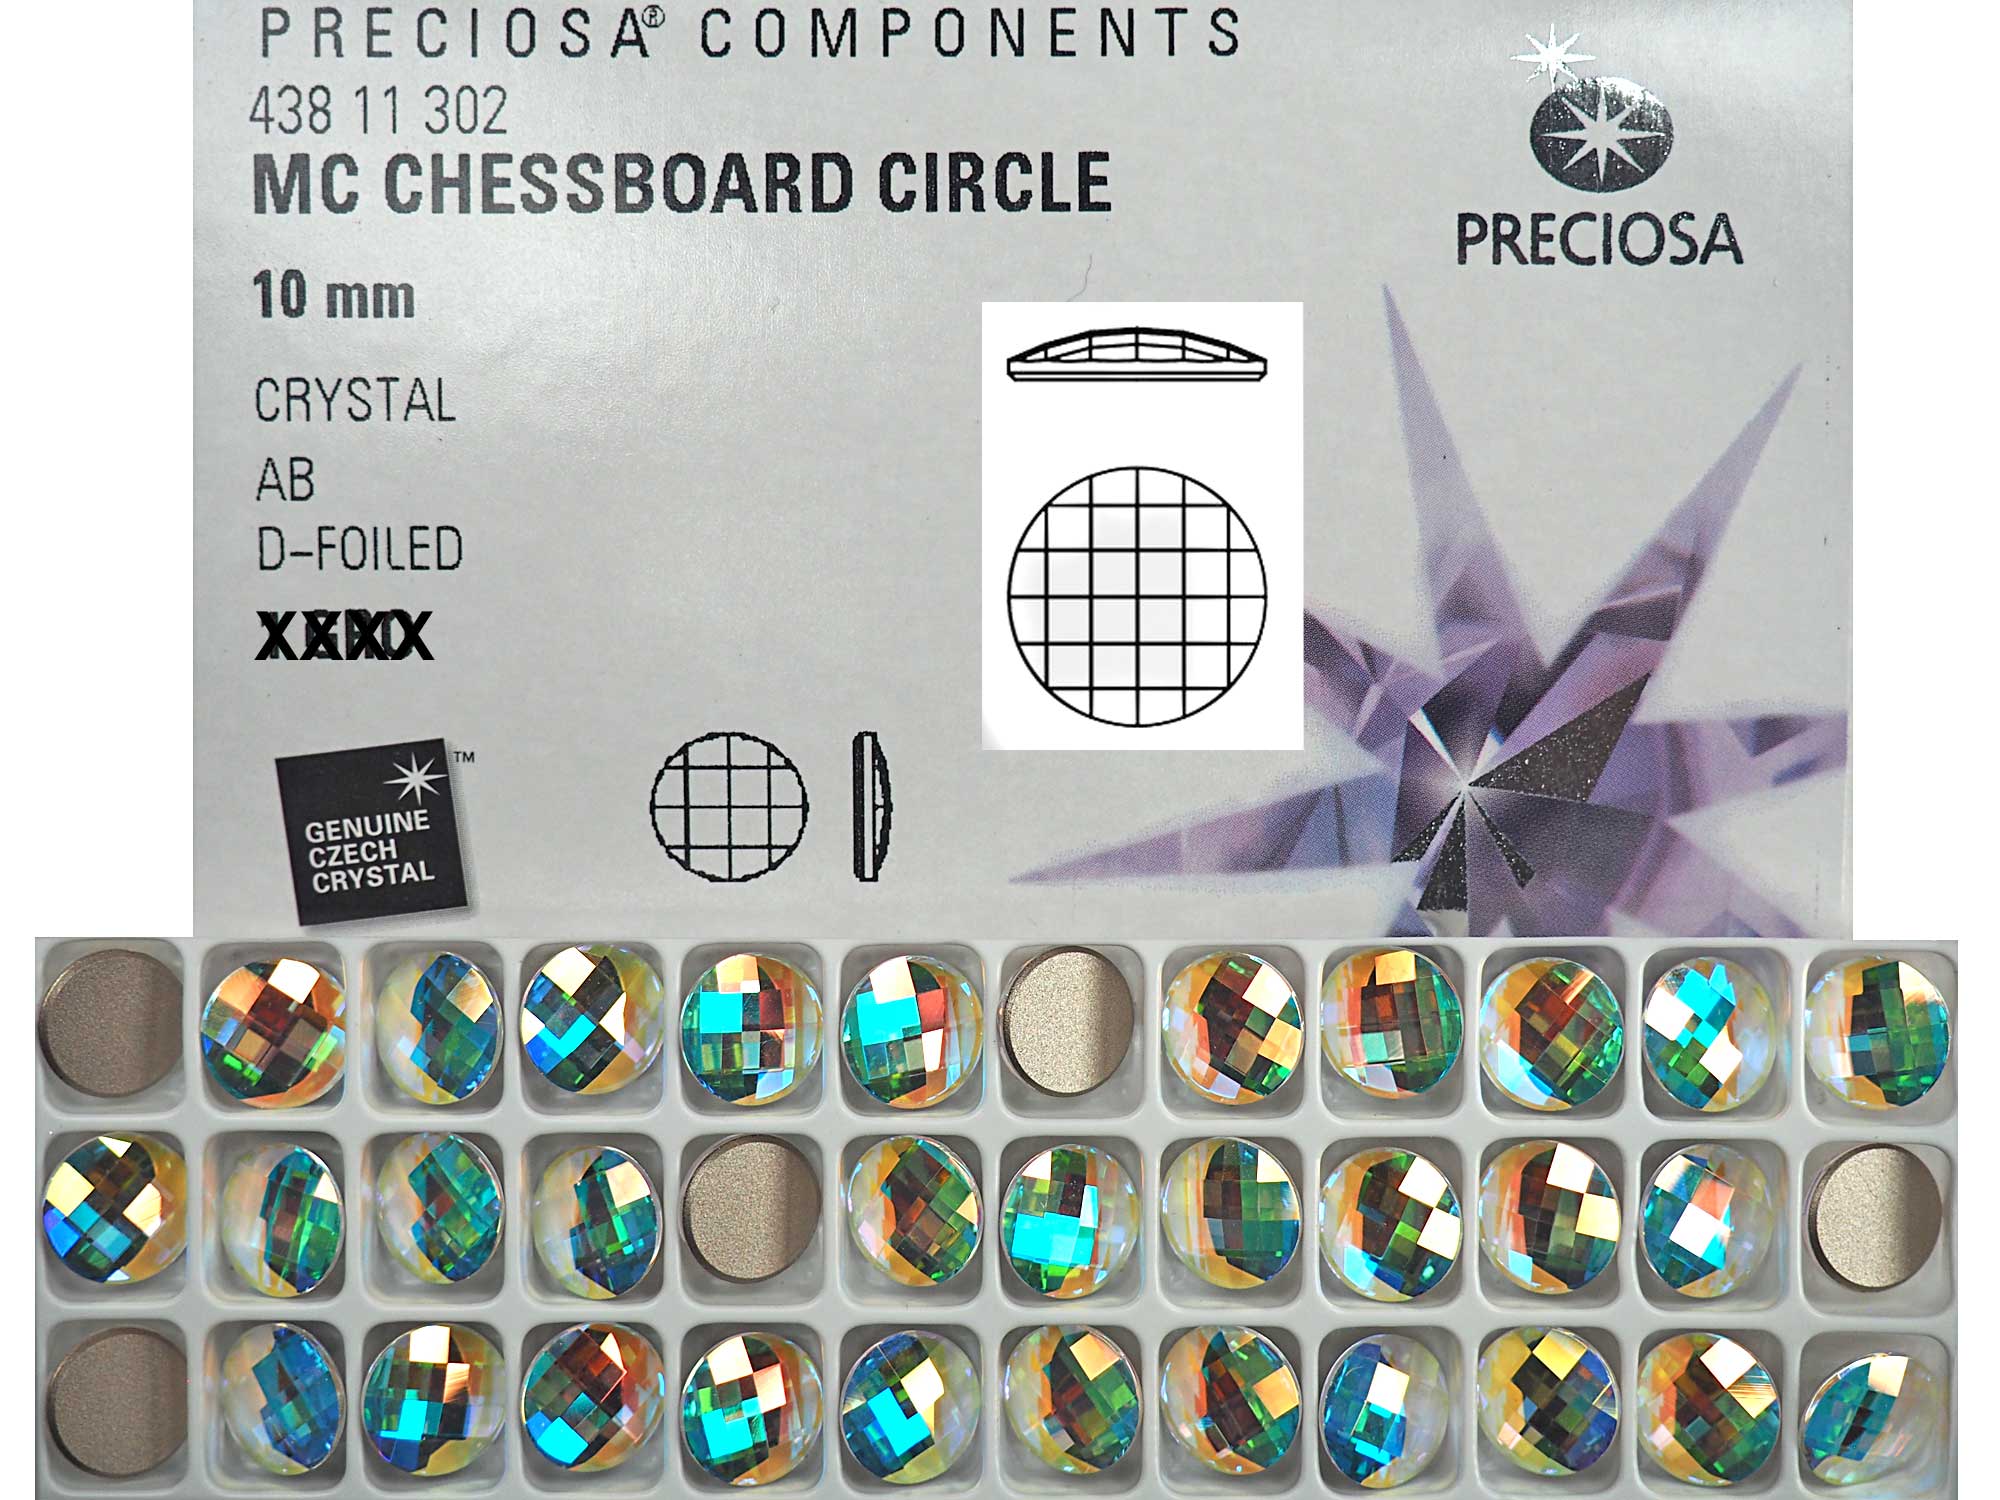 Crystal AB, Preciosa Czech MC Chessboard CIRCLE Maxima Flatback Stones Style #438-11-302 Silver Foiled, sizes 10mm, 14mm, 20mm